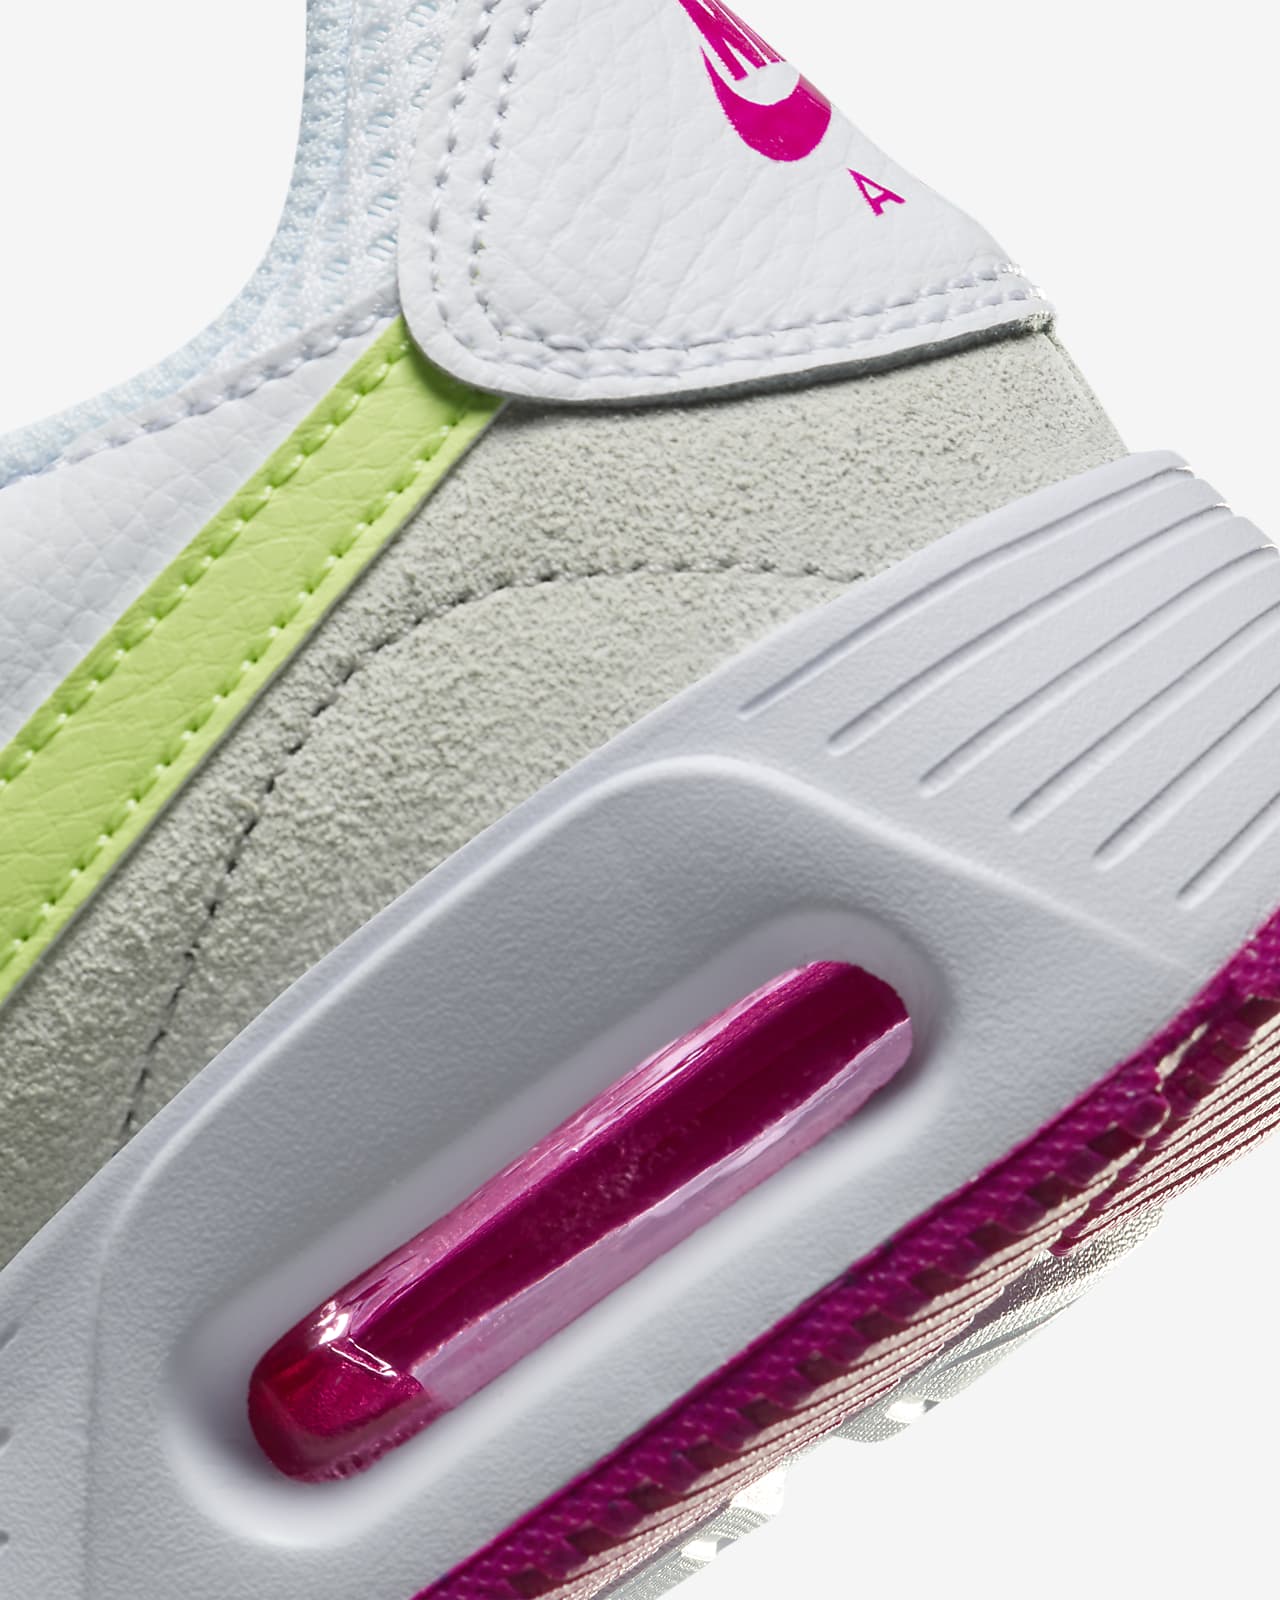 Custom Painted Nike Air Max 90s. Hot Pink Nike Air Max 90s. Neon